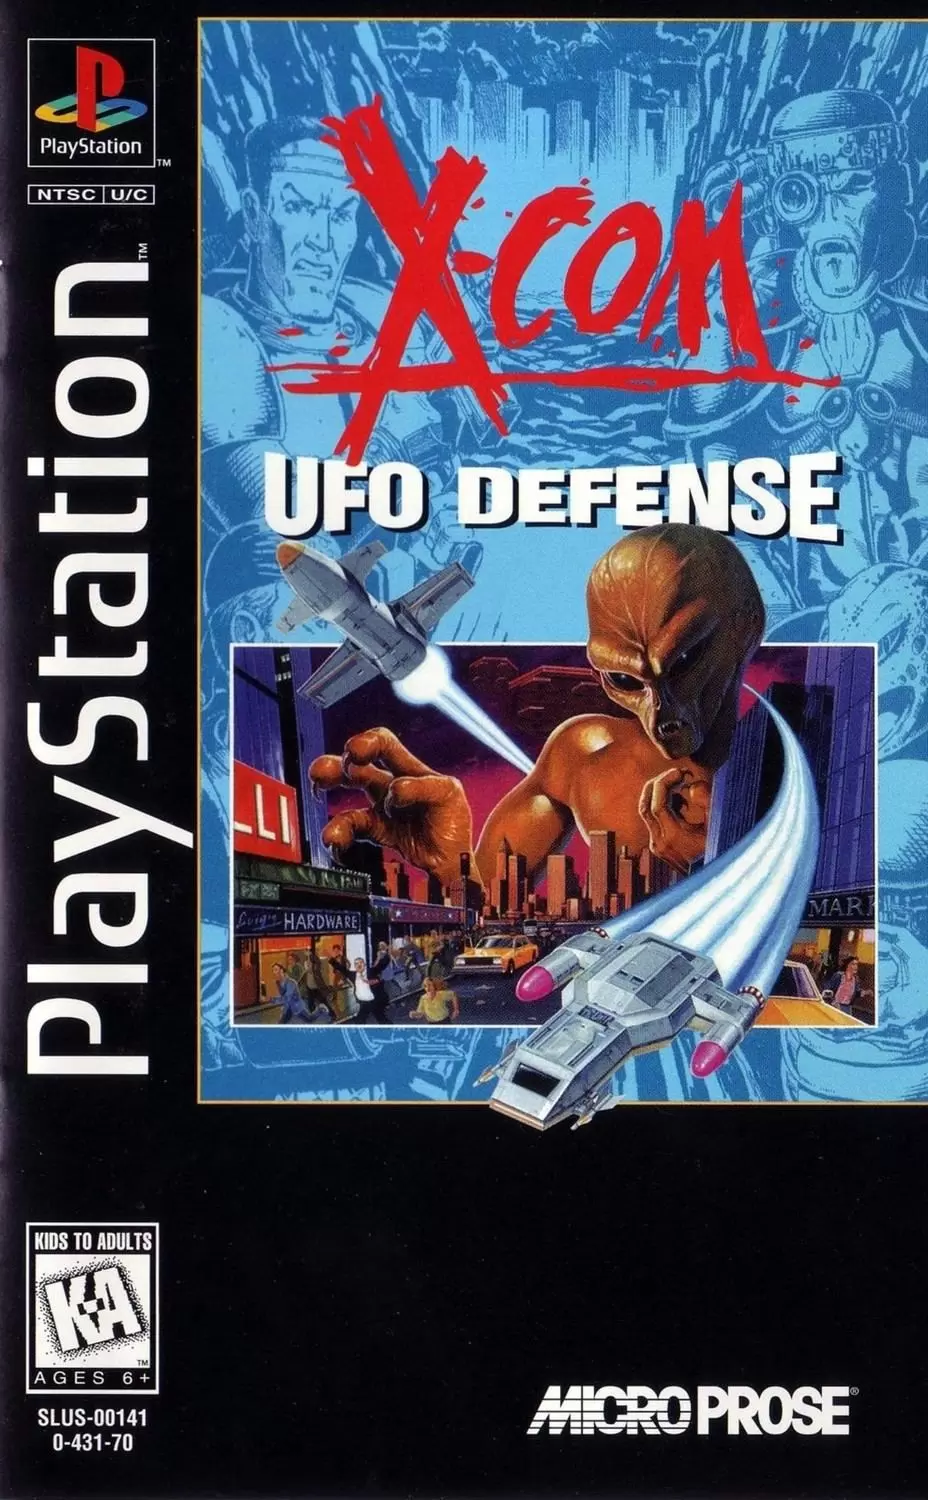 Playstation games - X-COM: UFO Defense